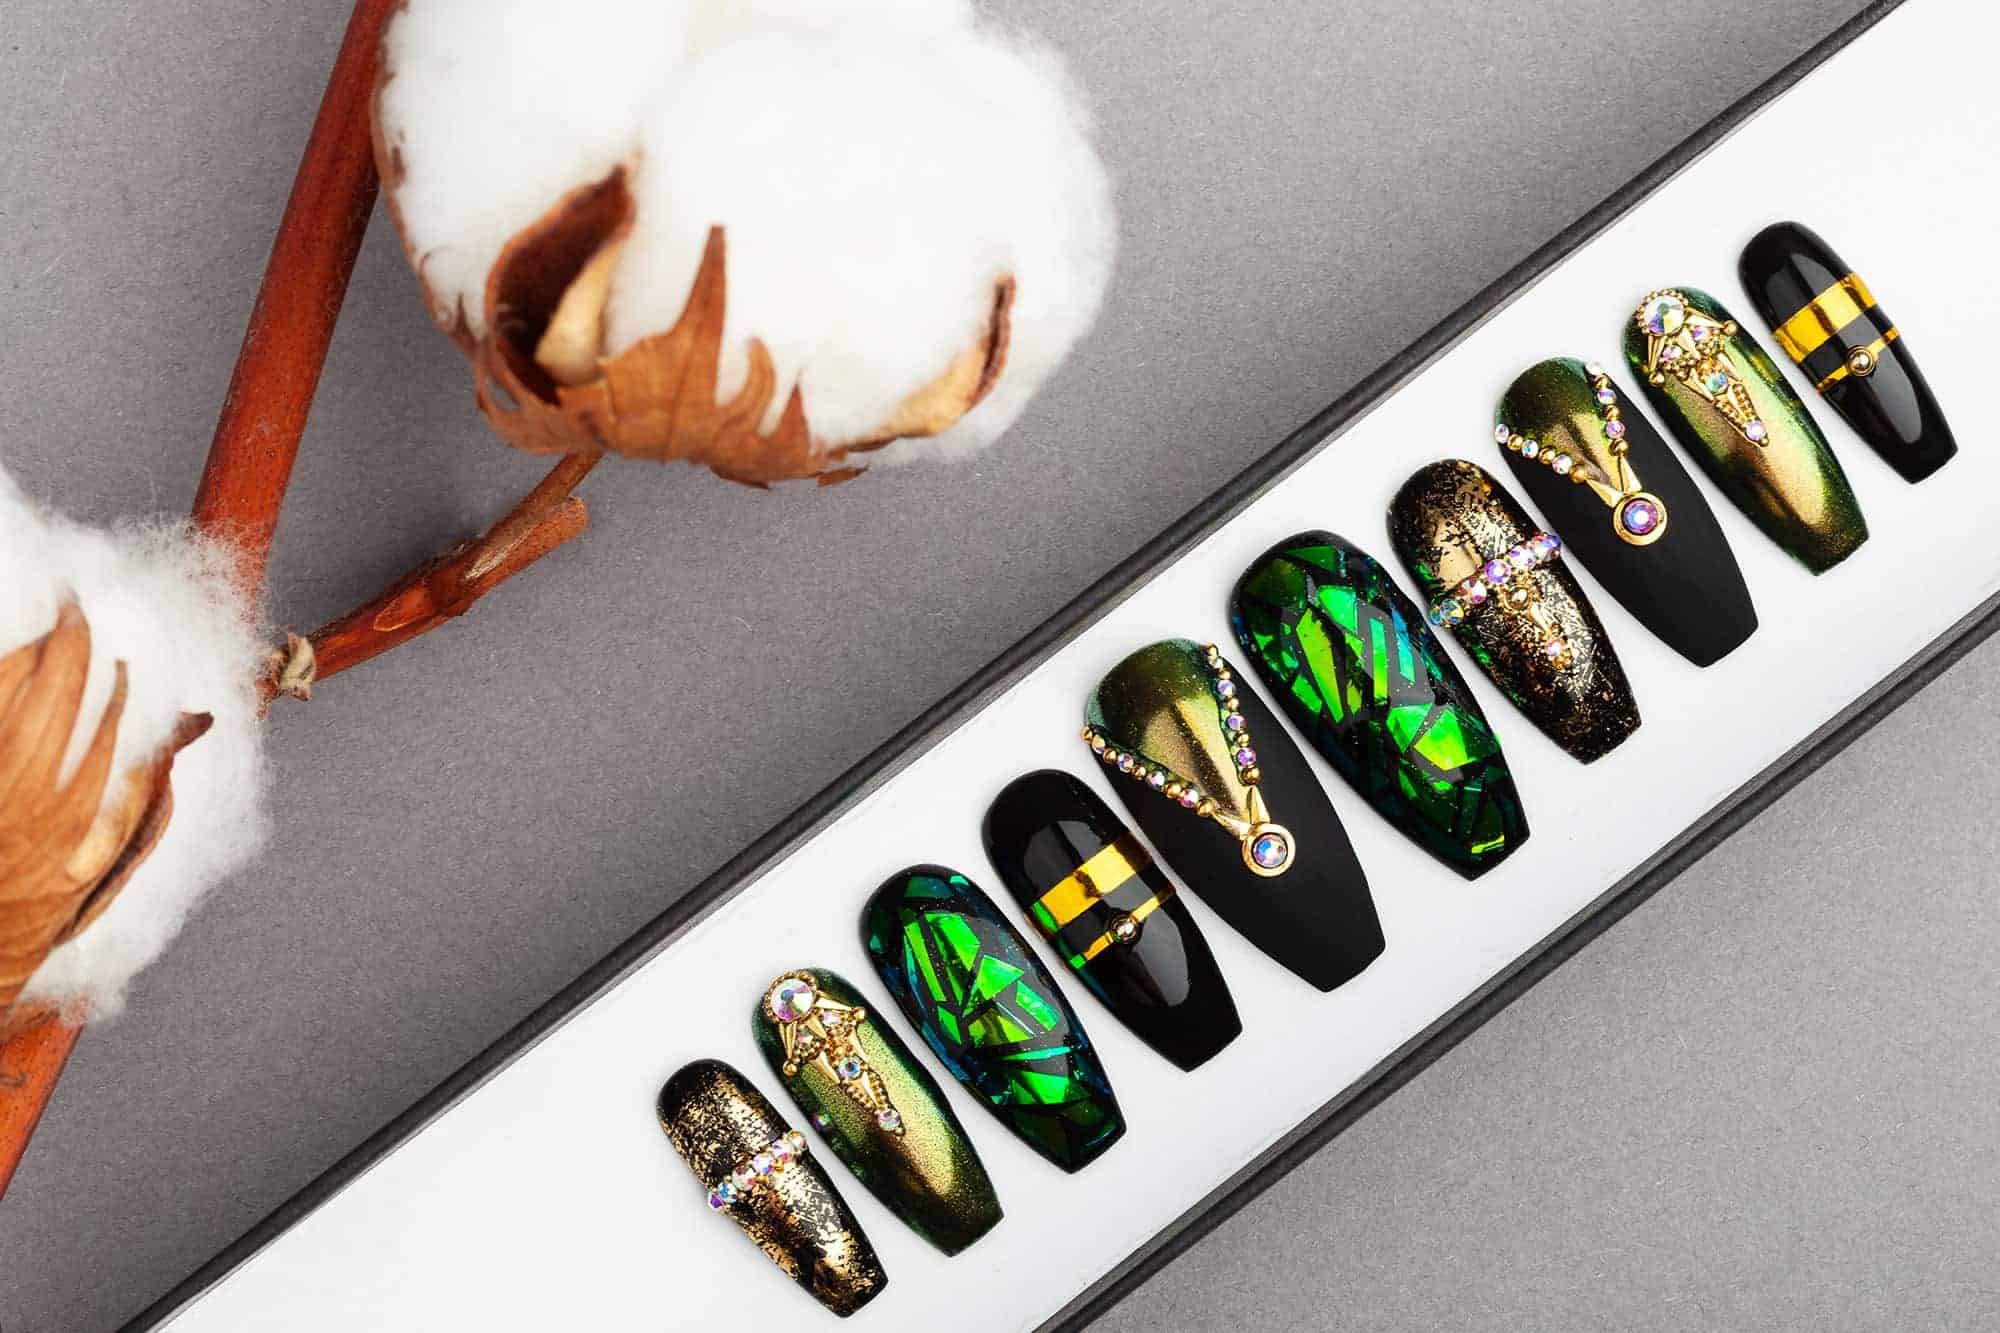 Egyptian Curse Press on Nails | Fake Nails | False Nails | Glue On Nails | Shattered Glass | Handpainted Nail Art